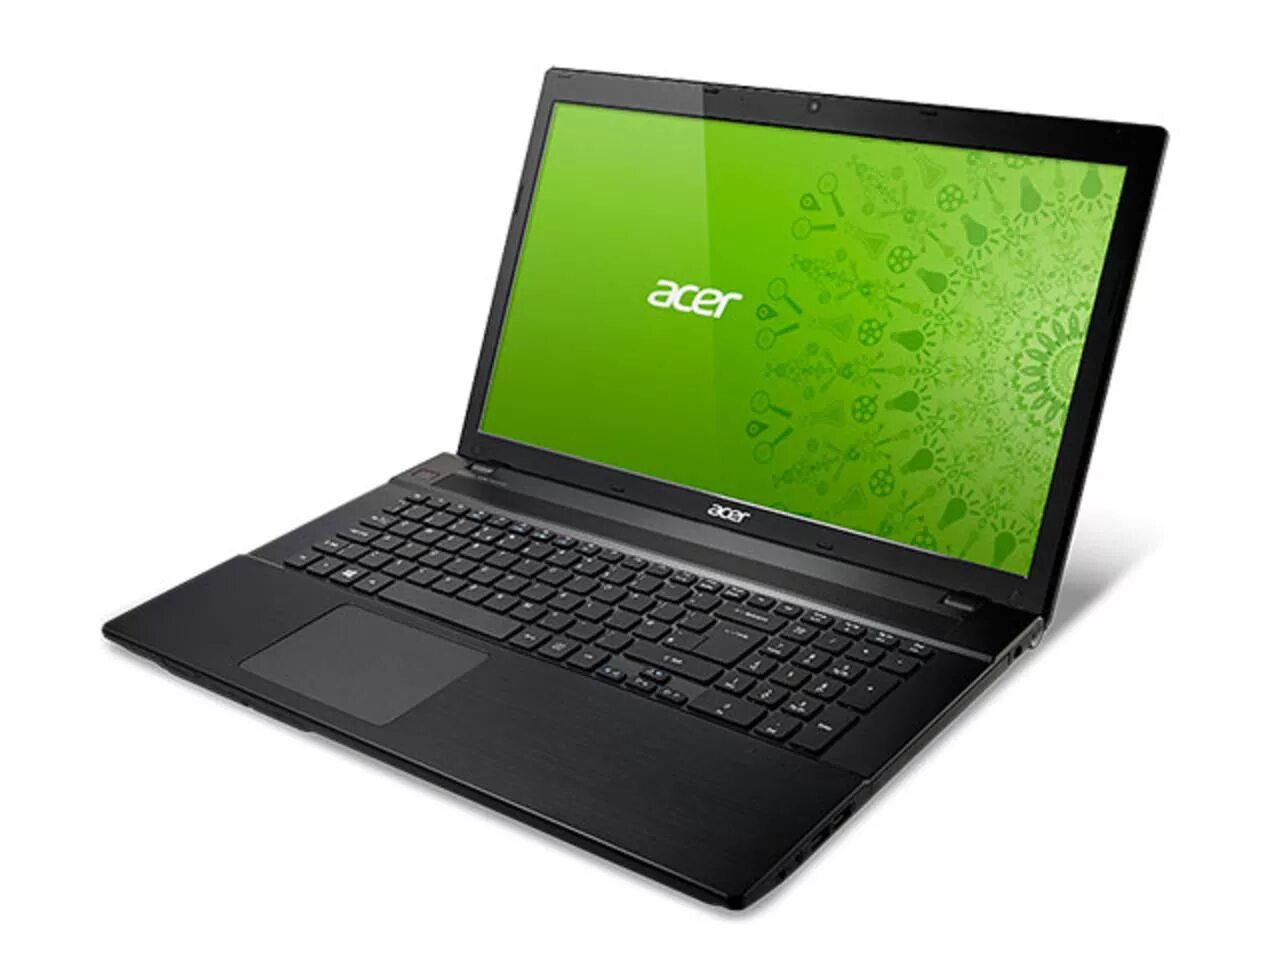 Ноутбук acer видит. Acer Aspire v3 772g. Acer Aspire 3 i3. Acer Aspire 3 Laptop. Ноутбук v3 772g 747a8g1tmakk.